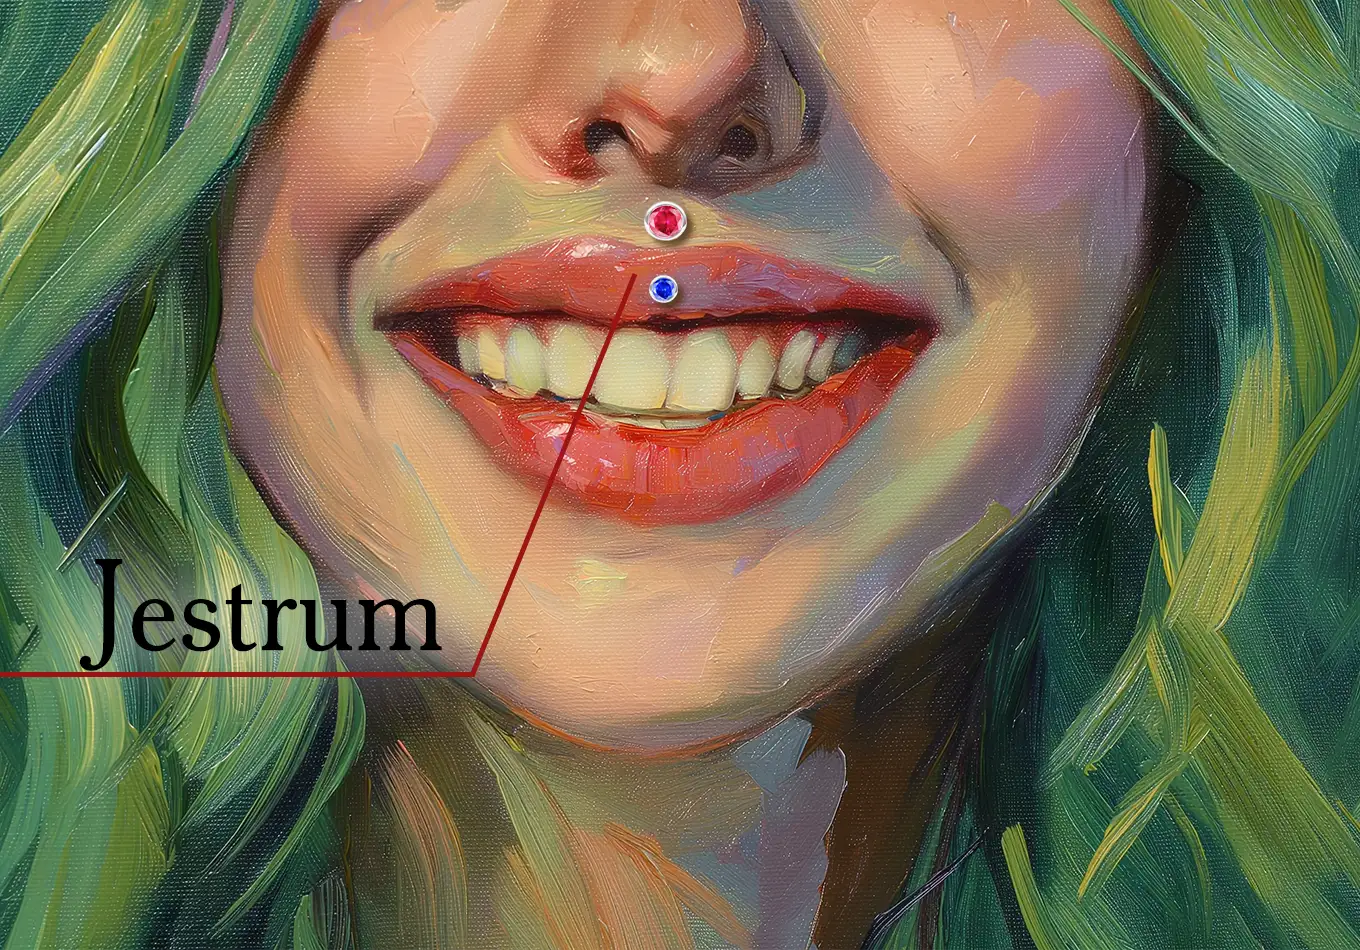 Jestrum (Vertical Medusa) piercing | Olertis | US